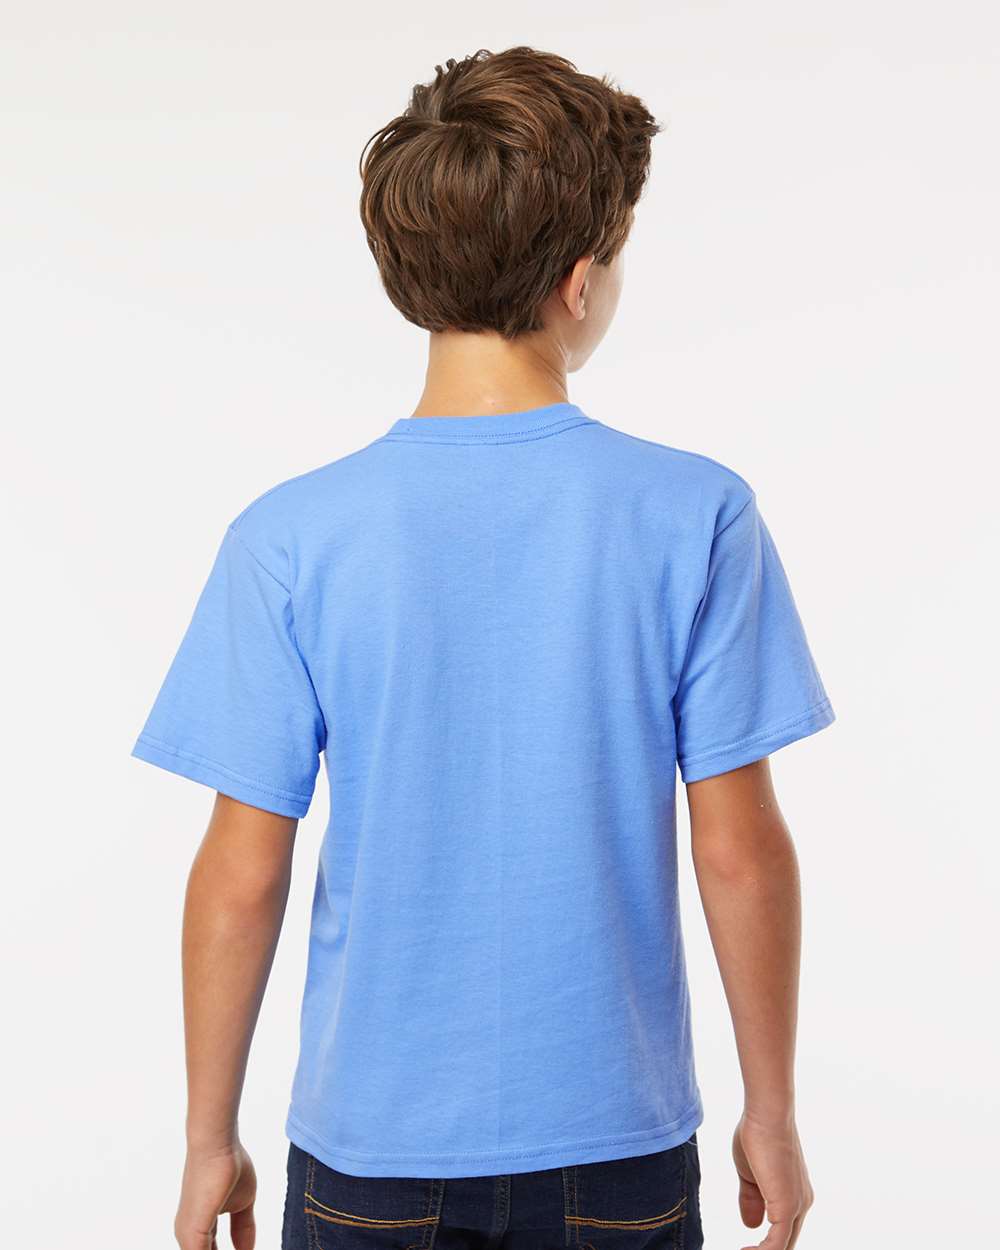 M&O Youth Gold Soft Touch T-Shirt 4850 #colormdl_Carolina Blue